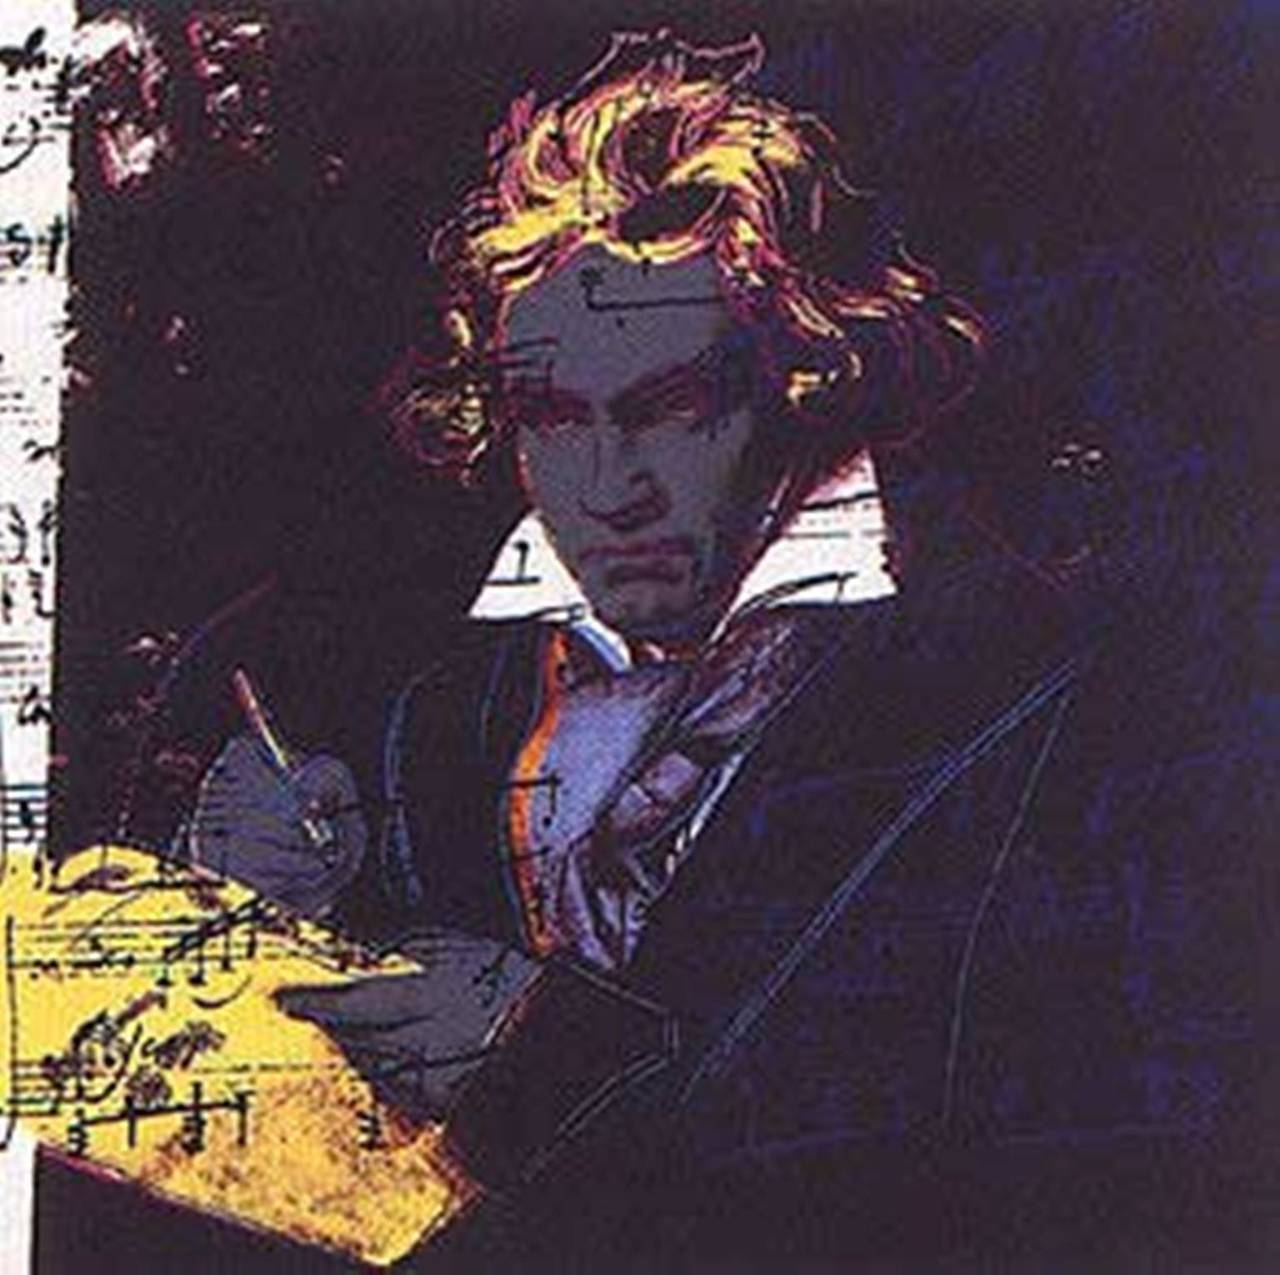 Beethoven II.393 - Print by Andy Warhol